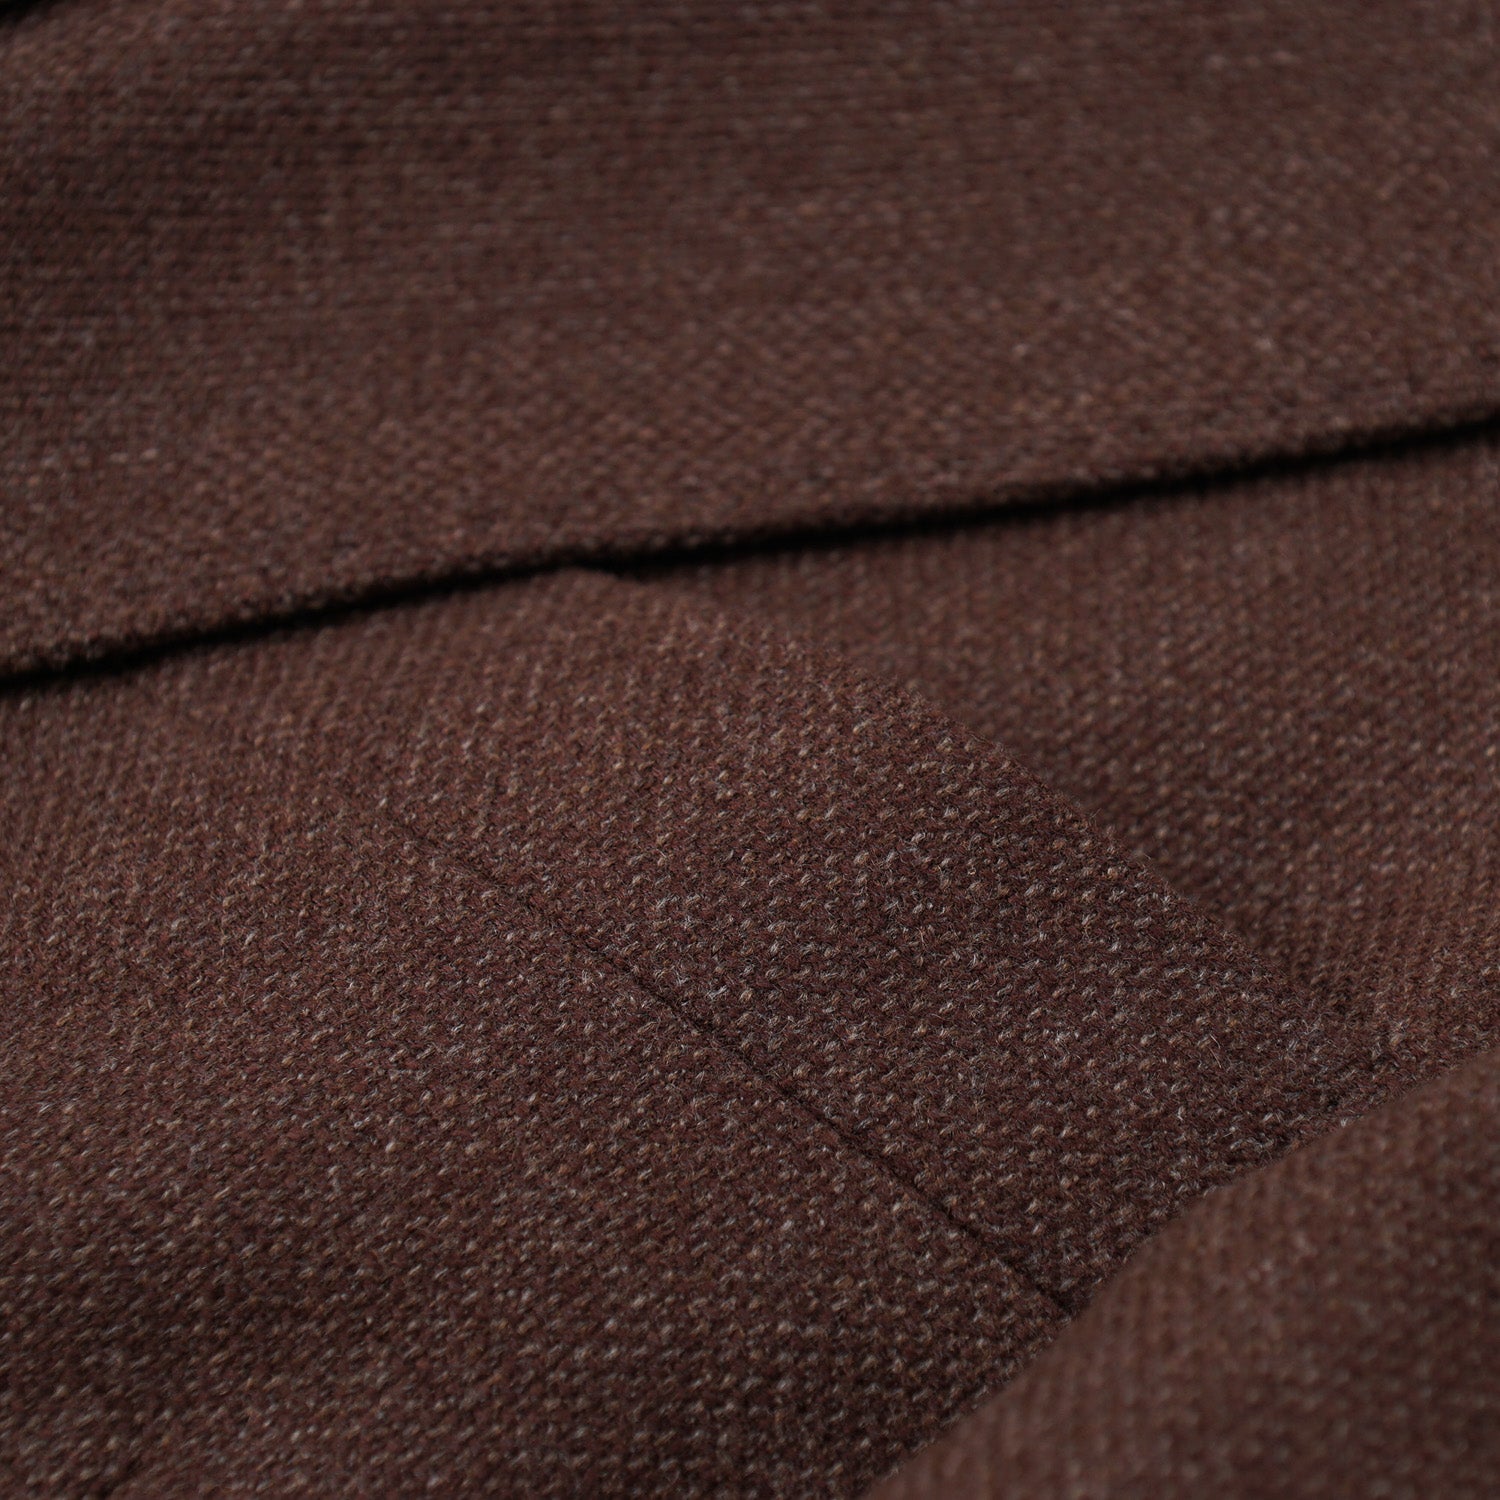 Brunello Cucinelli Soft-Woven Cashmere Sport Coat - Top Shelf Apparel